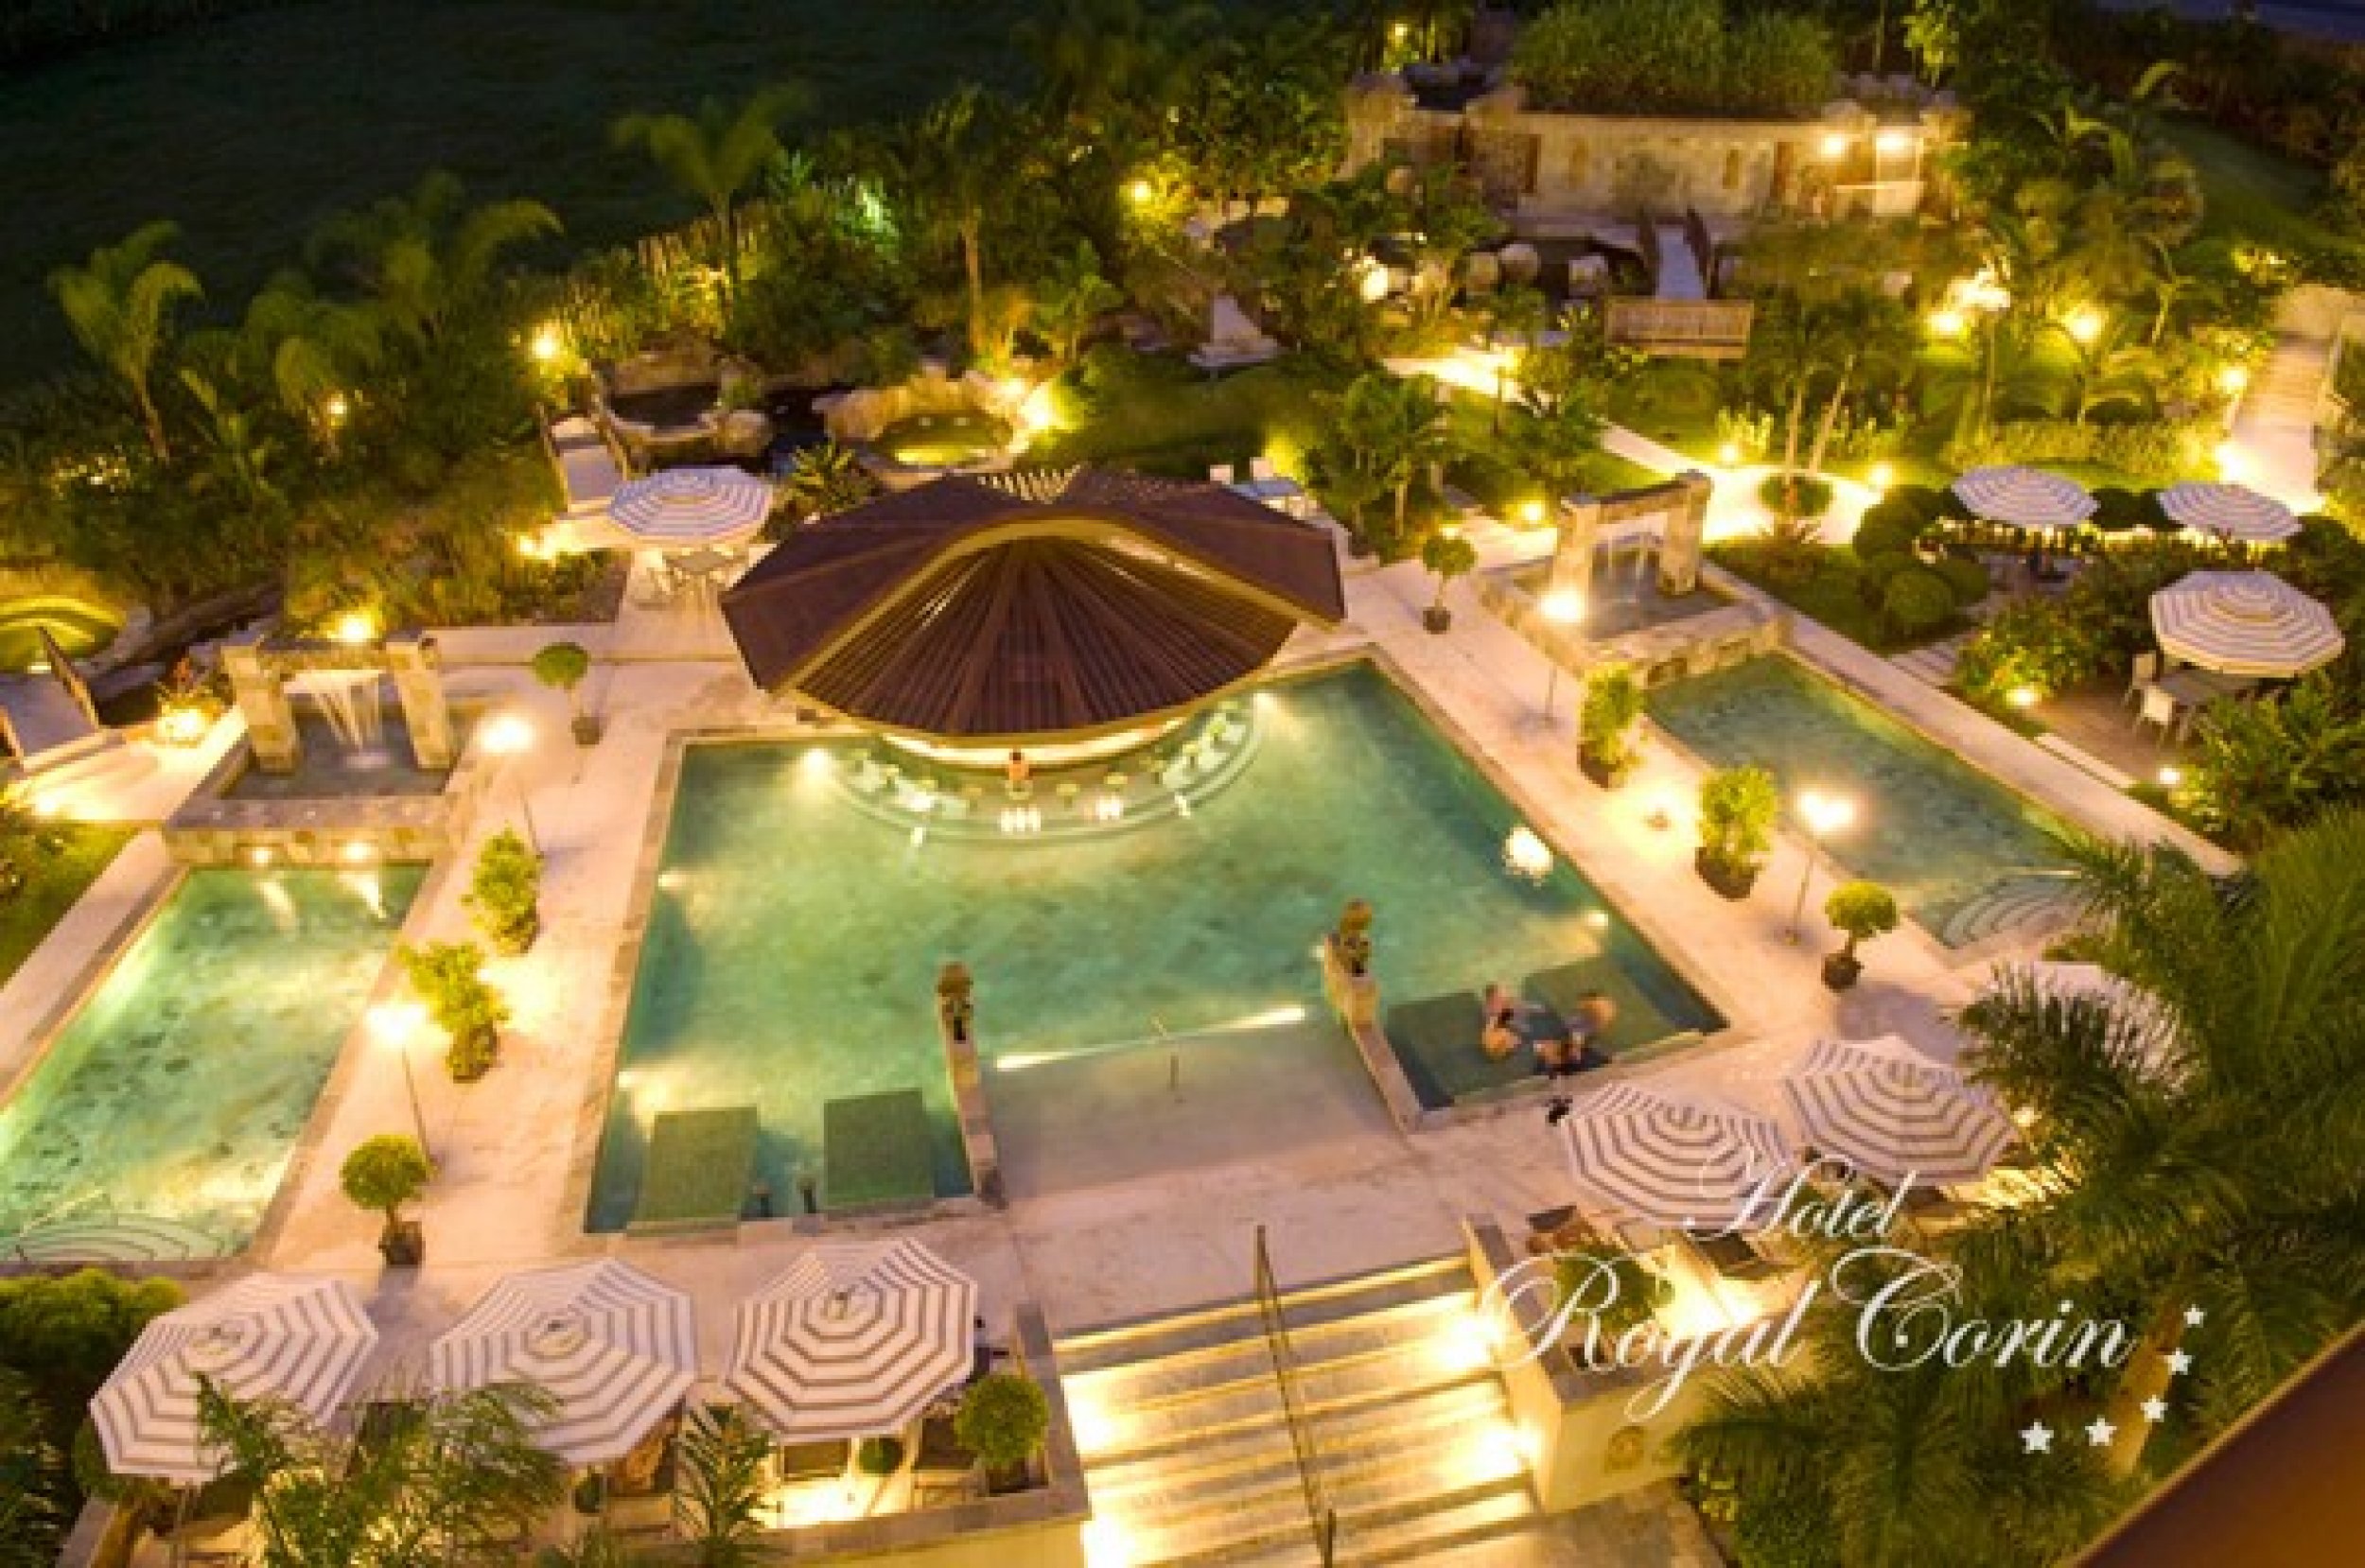 No. 3 -- Hotel Royal Corin 4 stars, Costa Rica